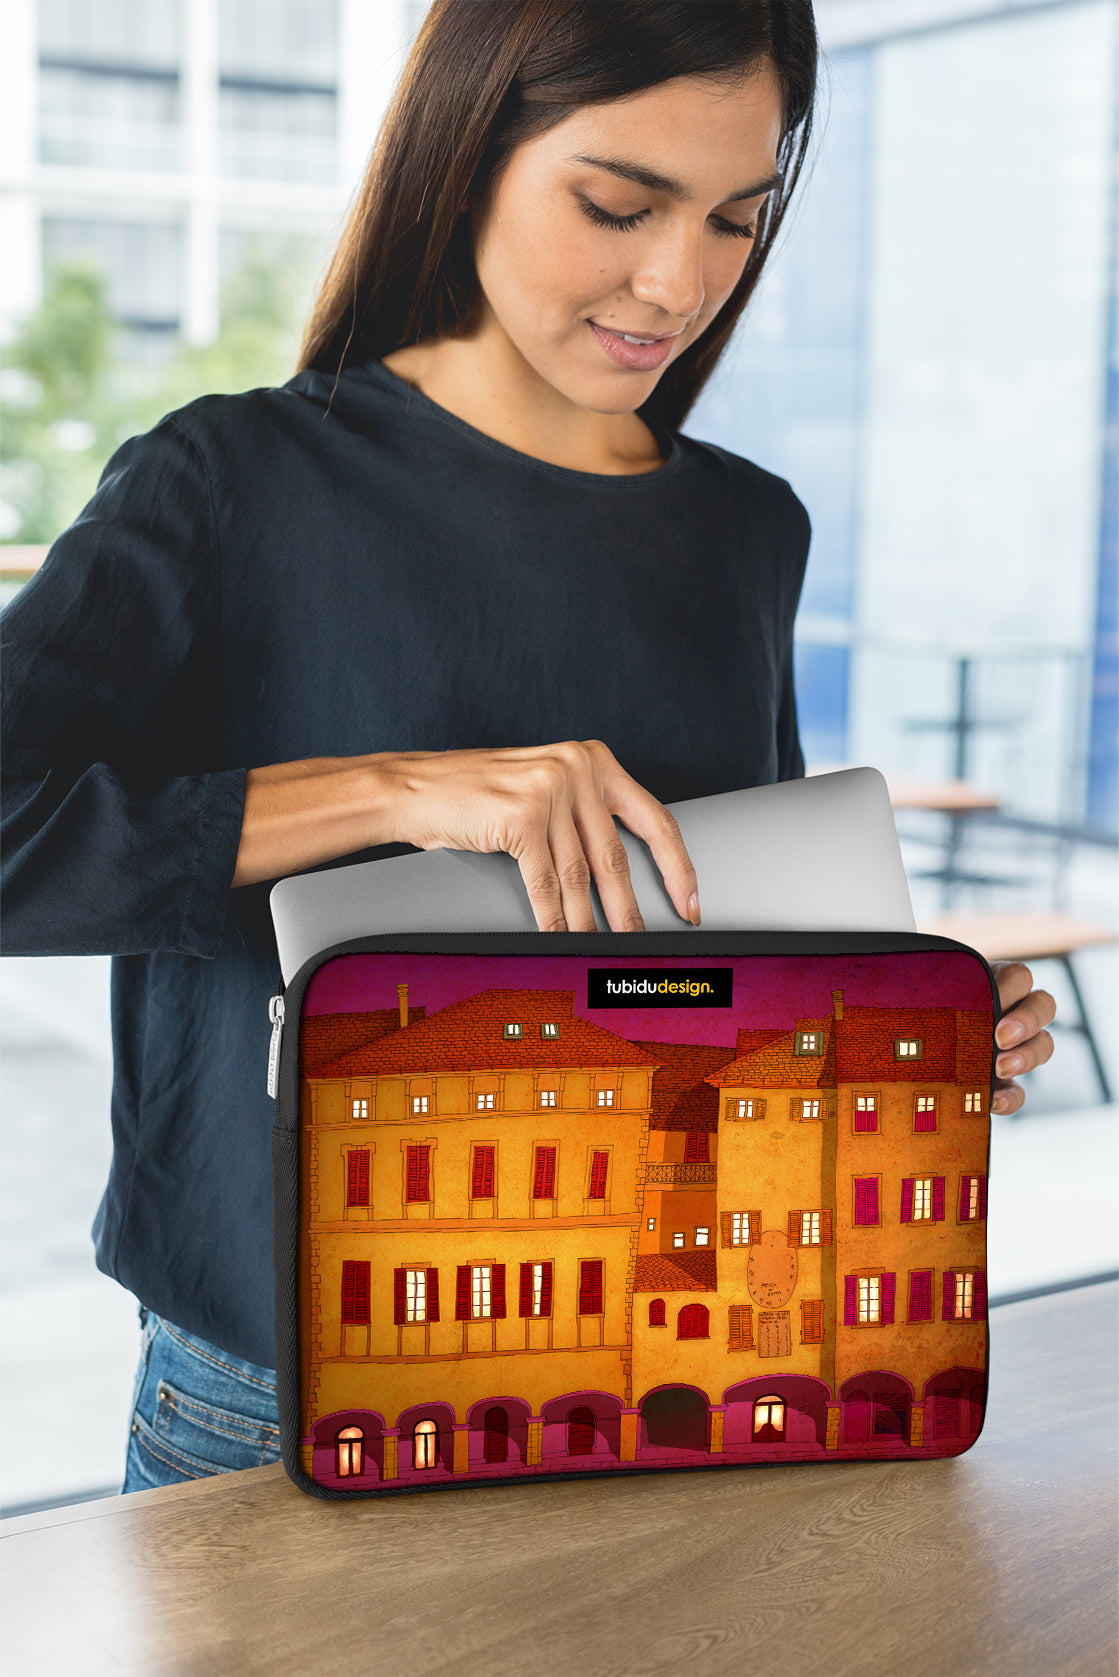 Italian facade (red) - Illustrated Laptop Sleeve